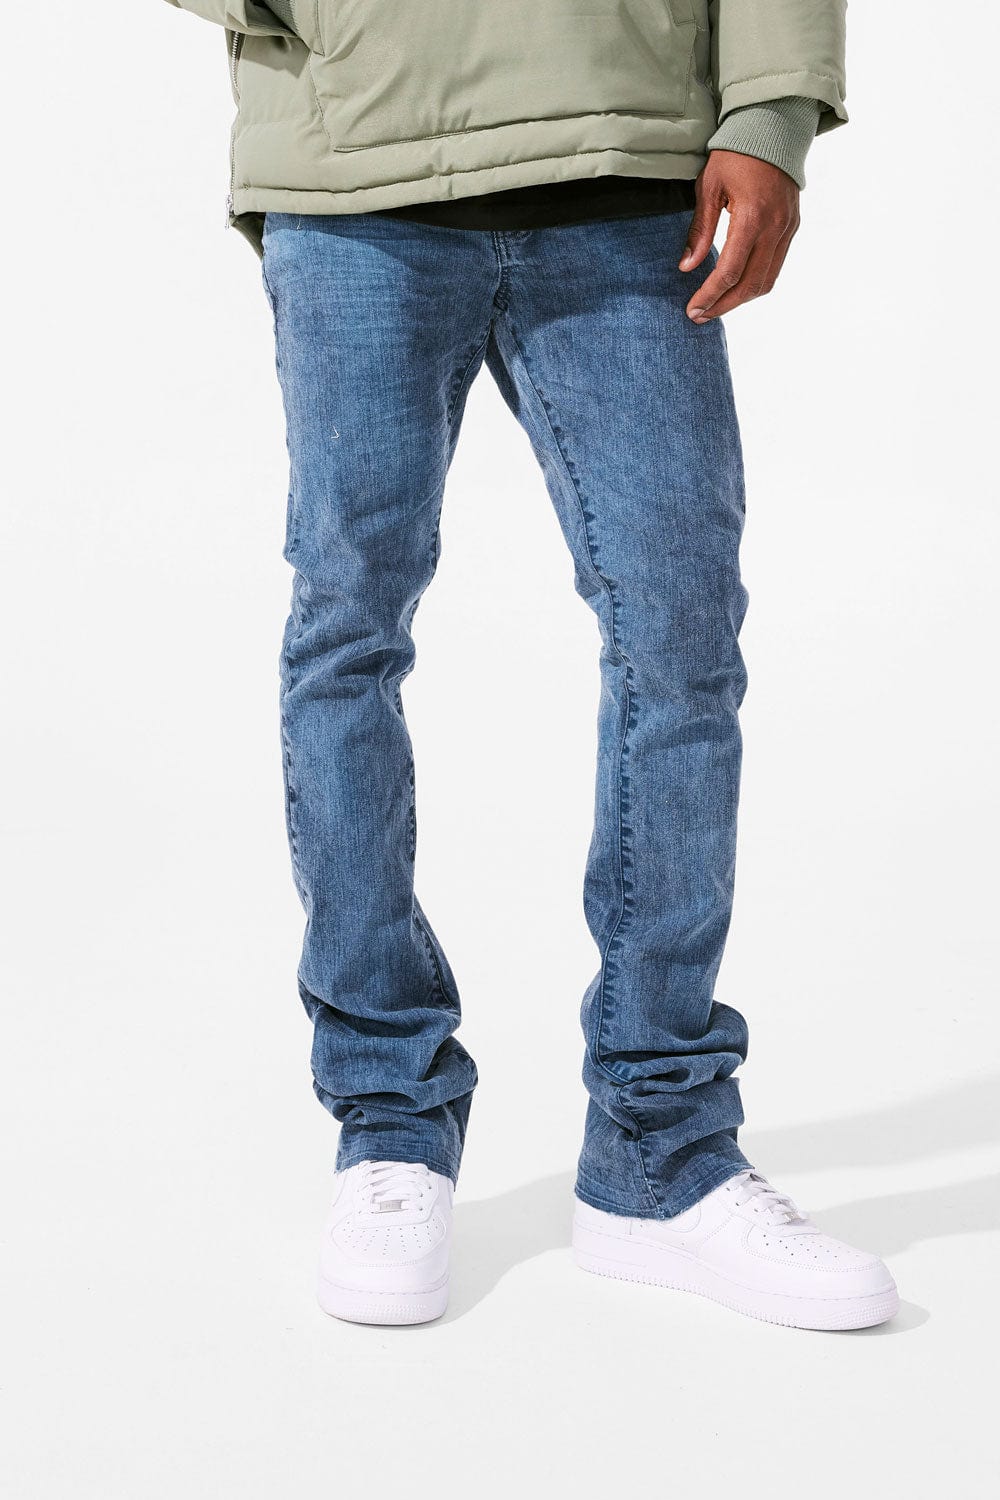 Martin Stacked - Full Bloom Denim Jeans - Ocean Indigo